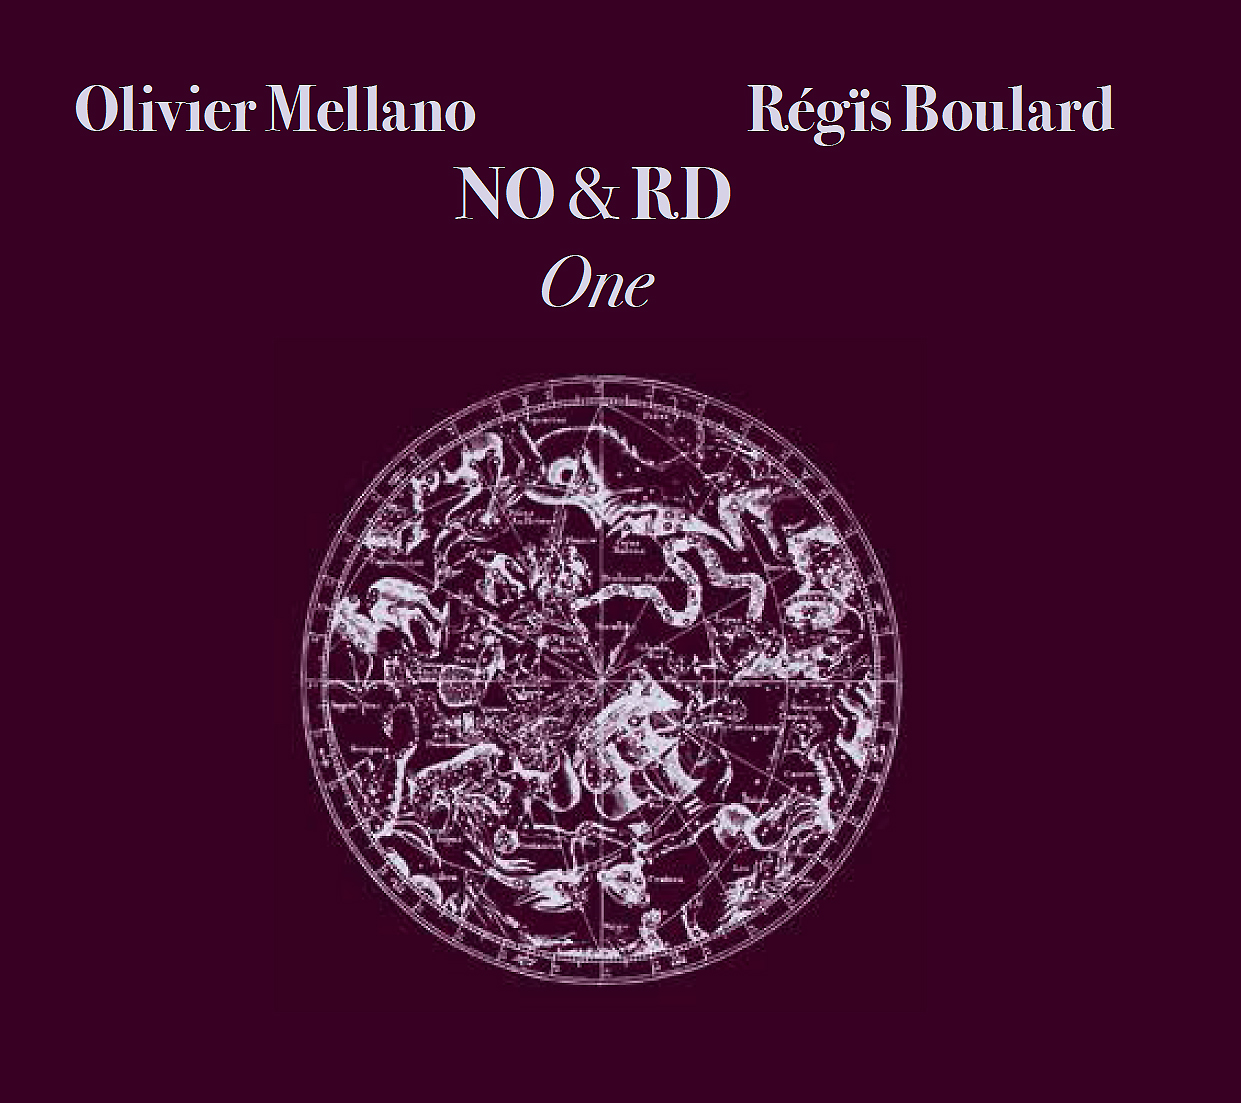 NO&RD (OLIVIER MELLANO-REGIS BOULARD) - One (limited 300 copies)